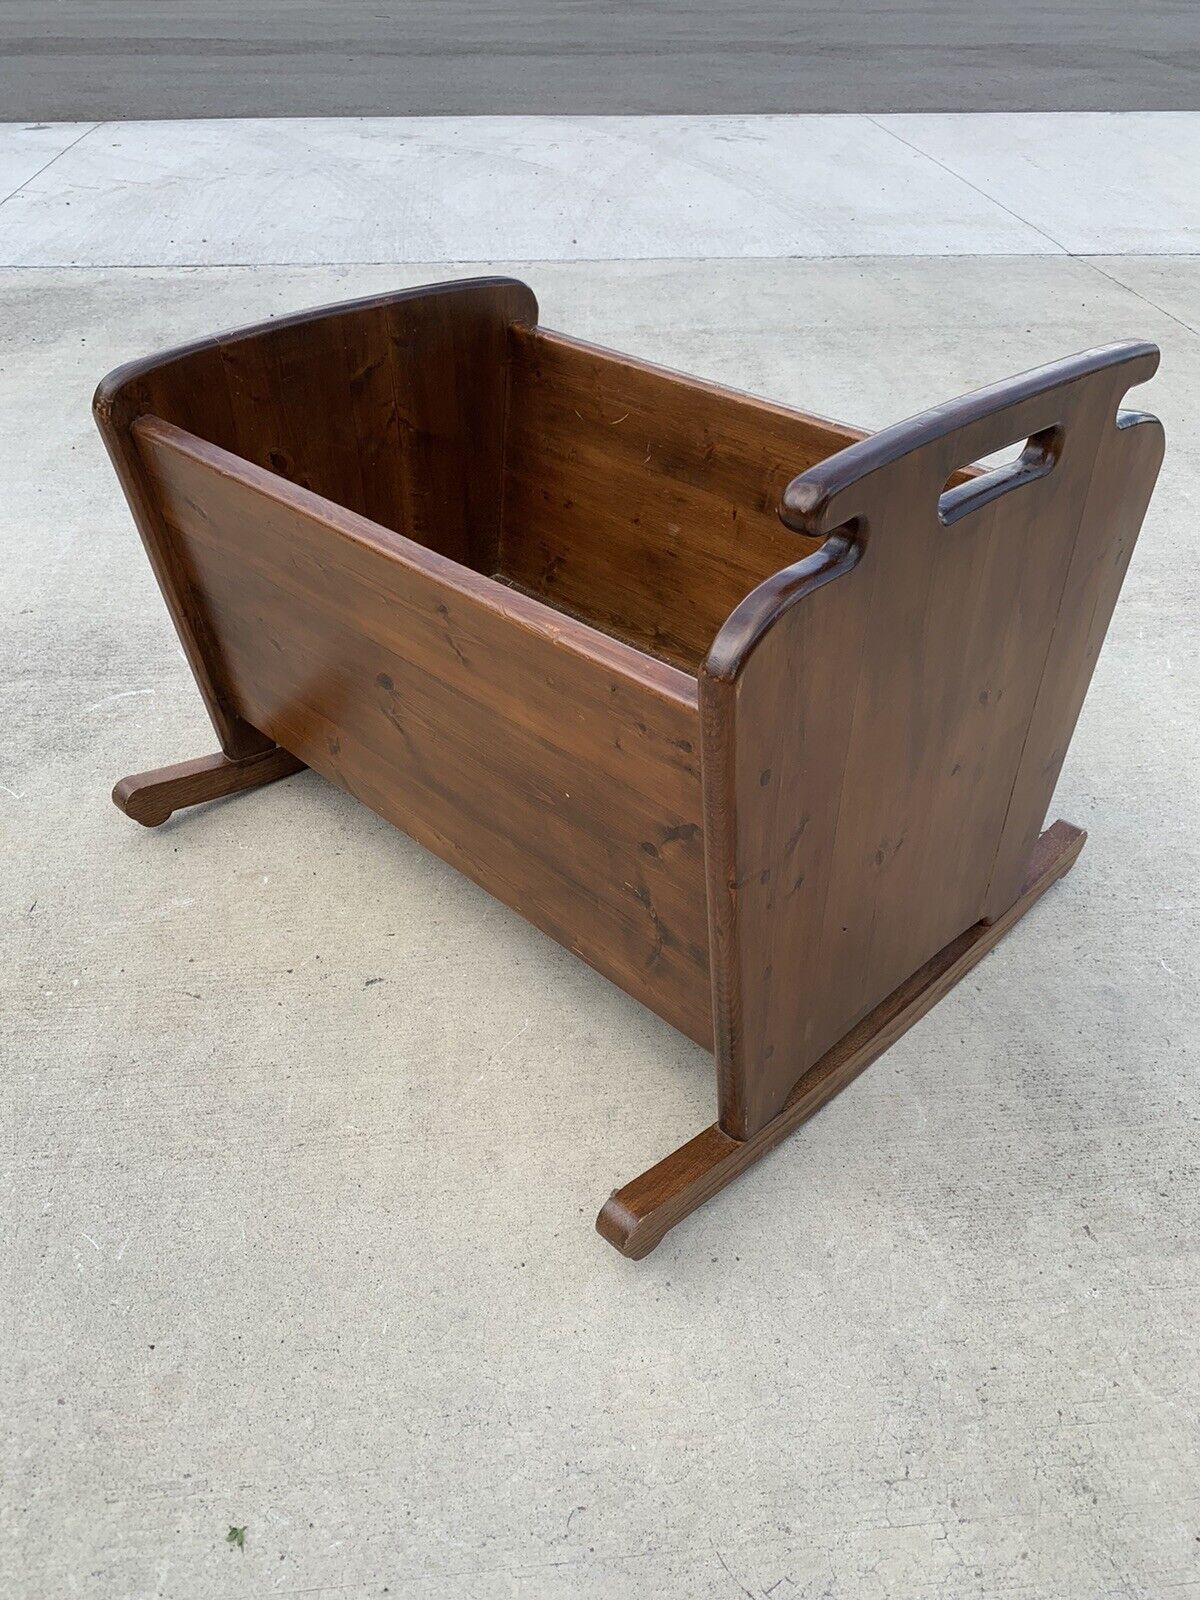 Homemade wooden antique cradle